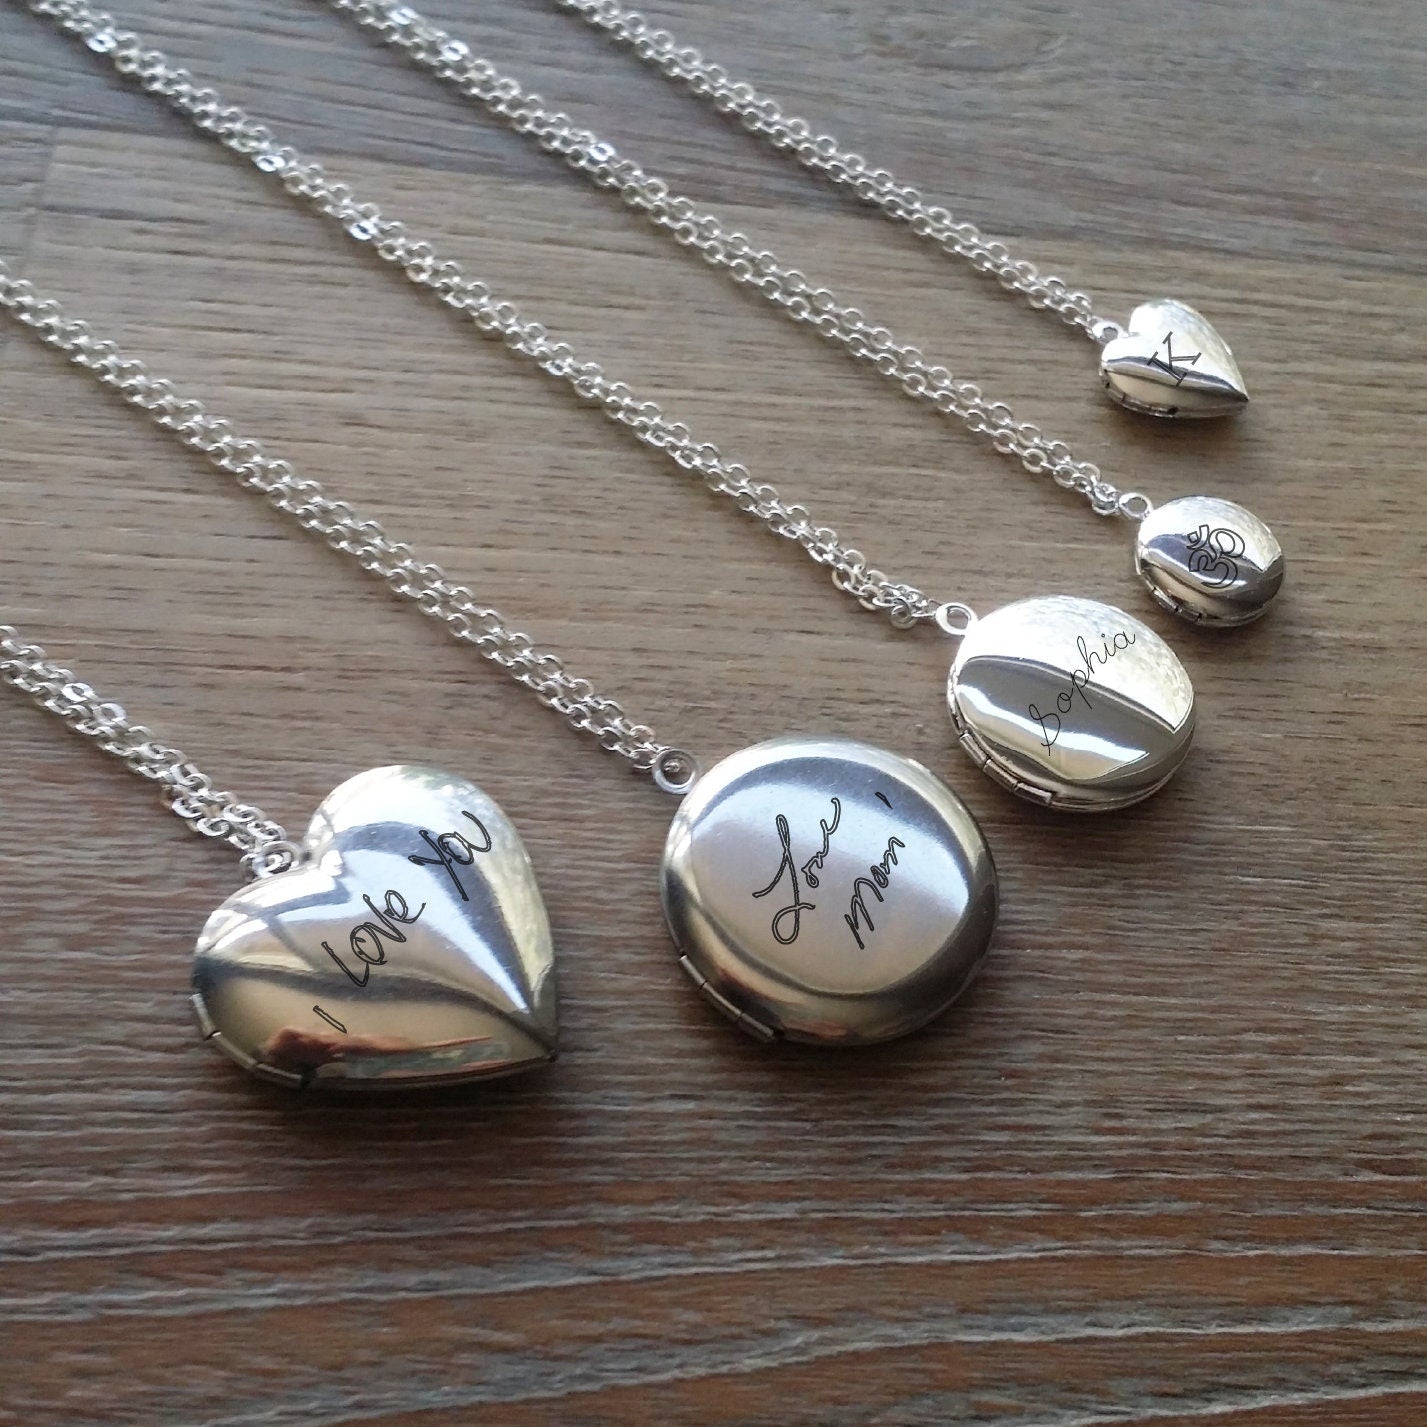 Handwritten Heart locket necklace, Customized engraved pendant